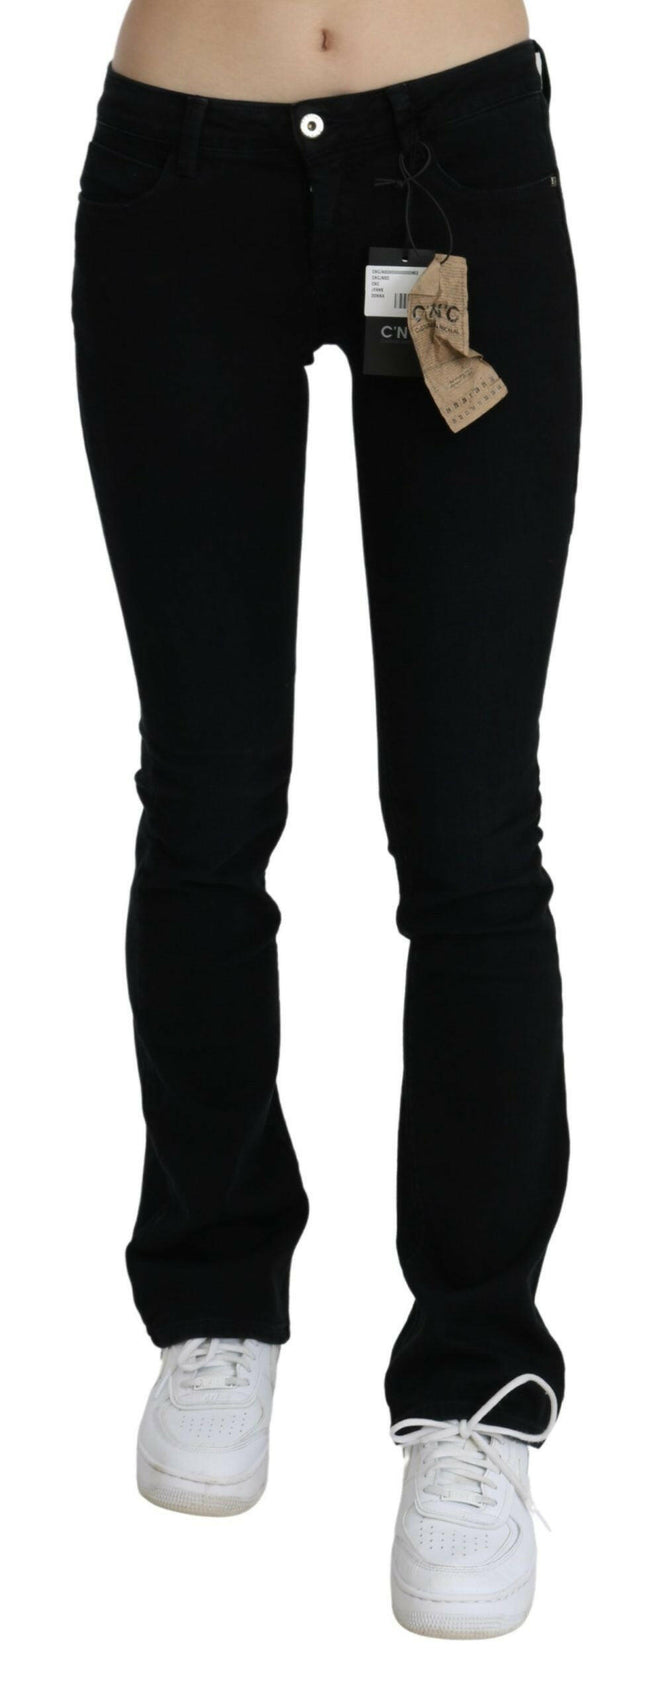 Costume National Black Low Waist Skinny Denim Cotton Jeans - GENUINE AUTHENTIC BRAND LLC  